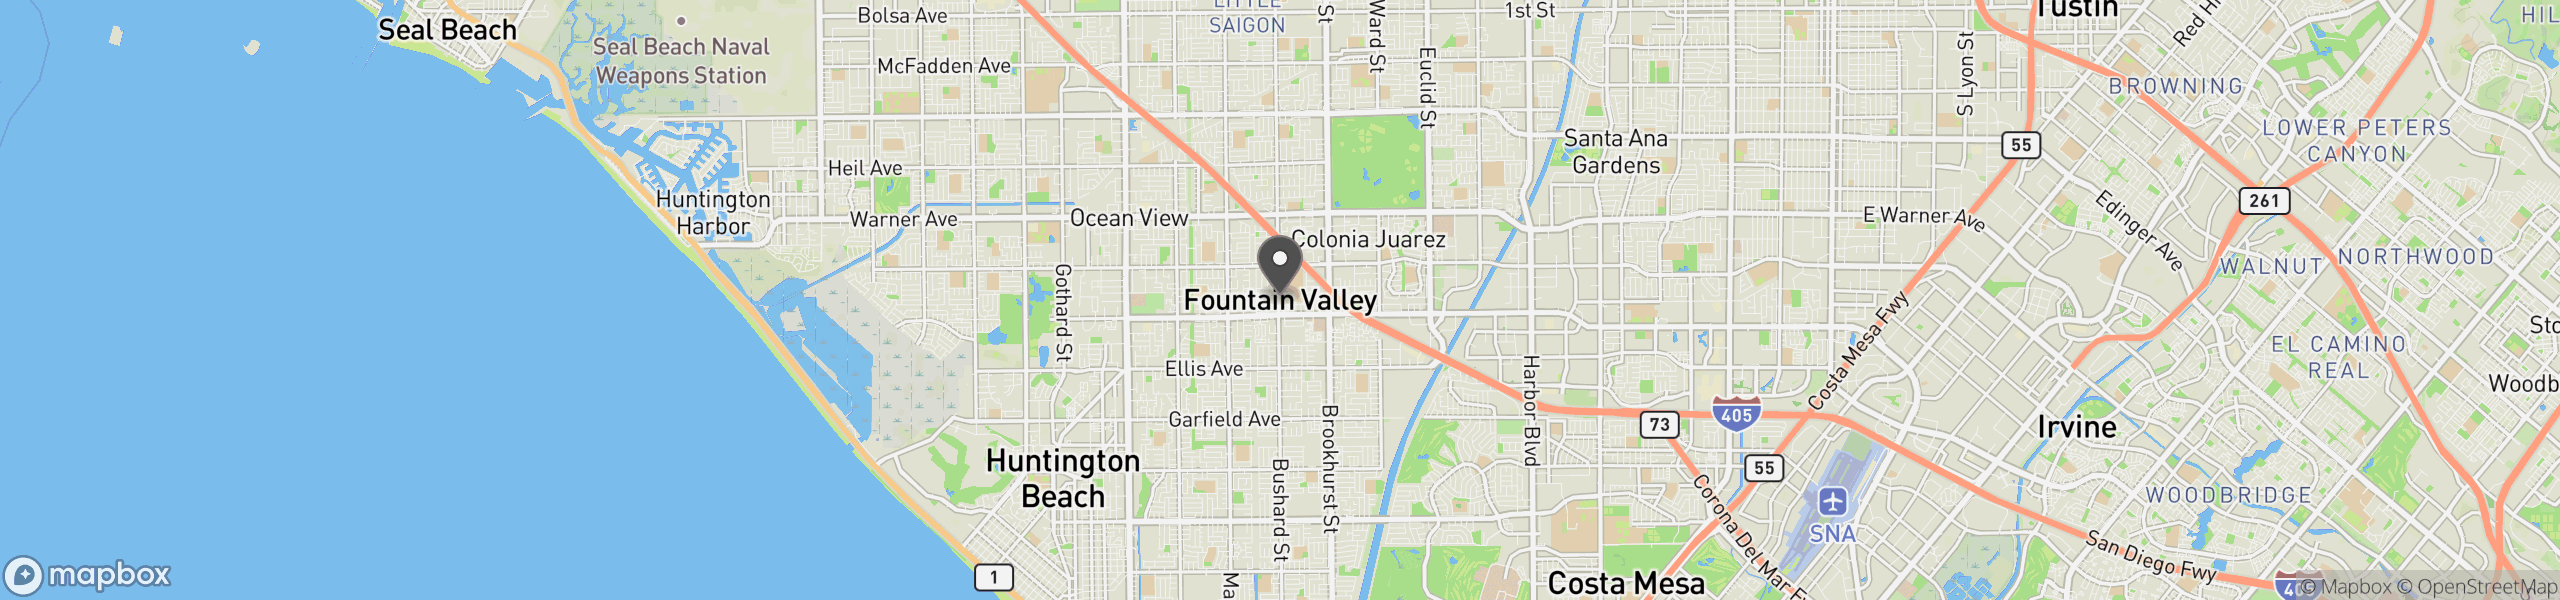 Fountain Valley, CA